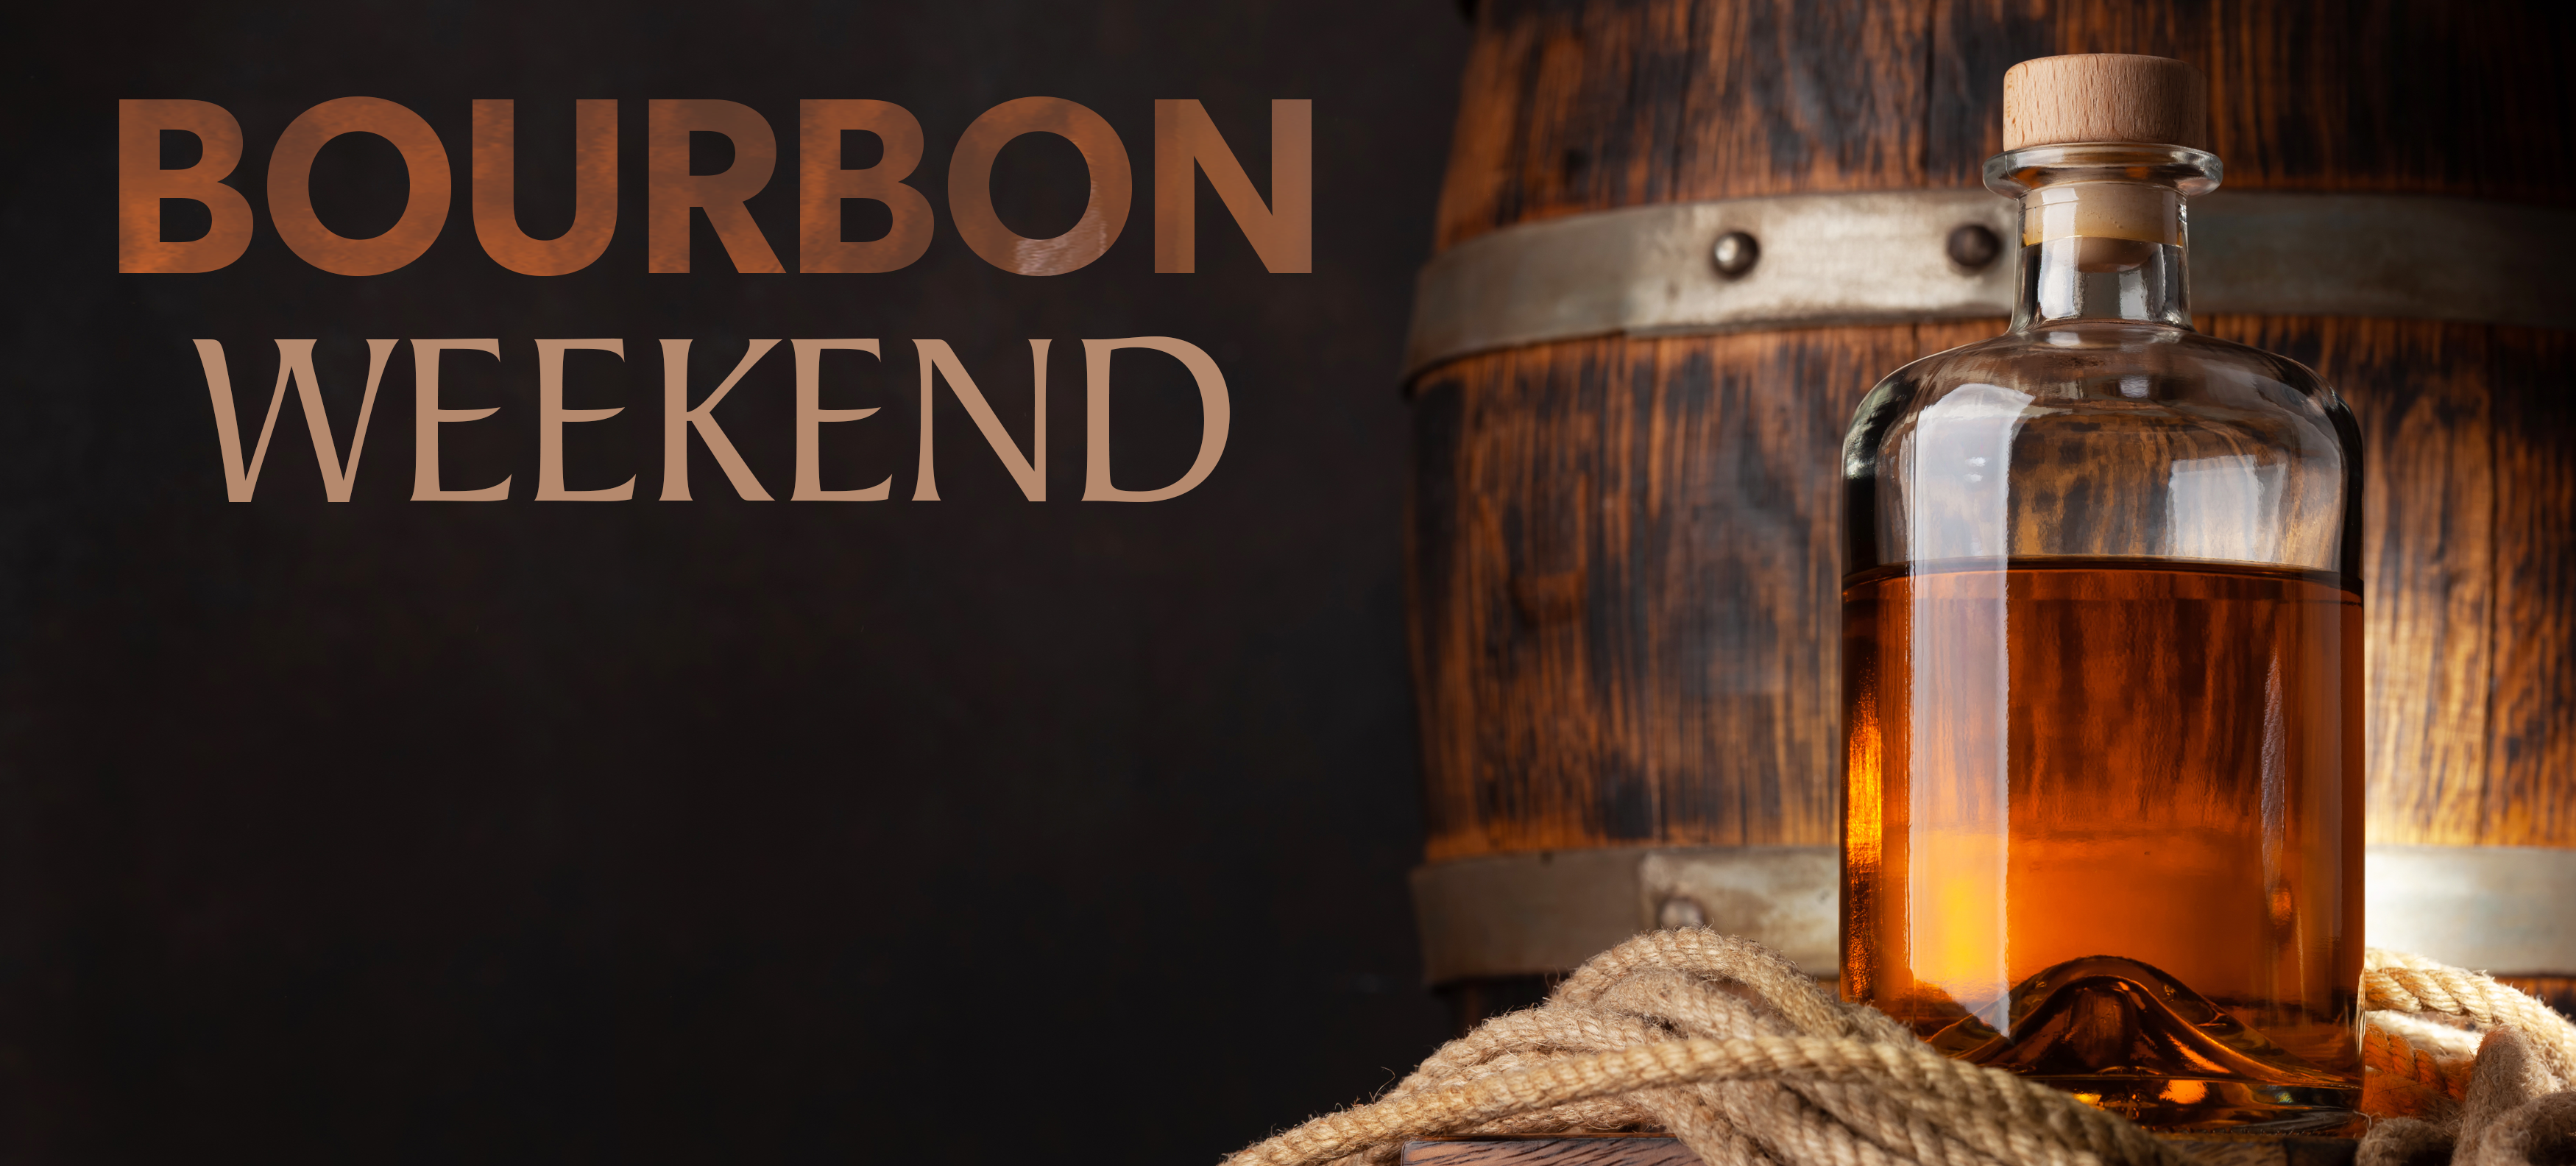 Bourbon Weekend header photo